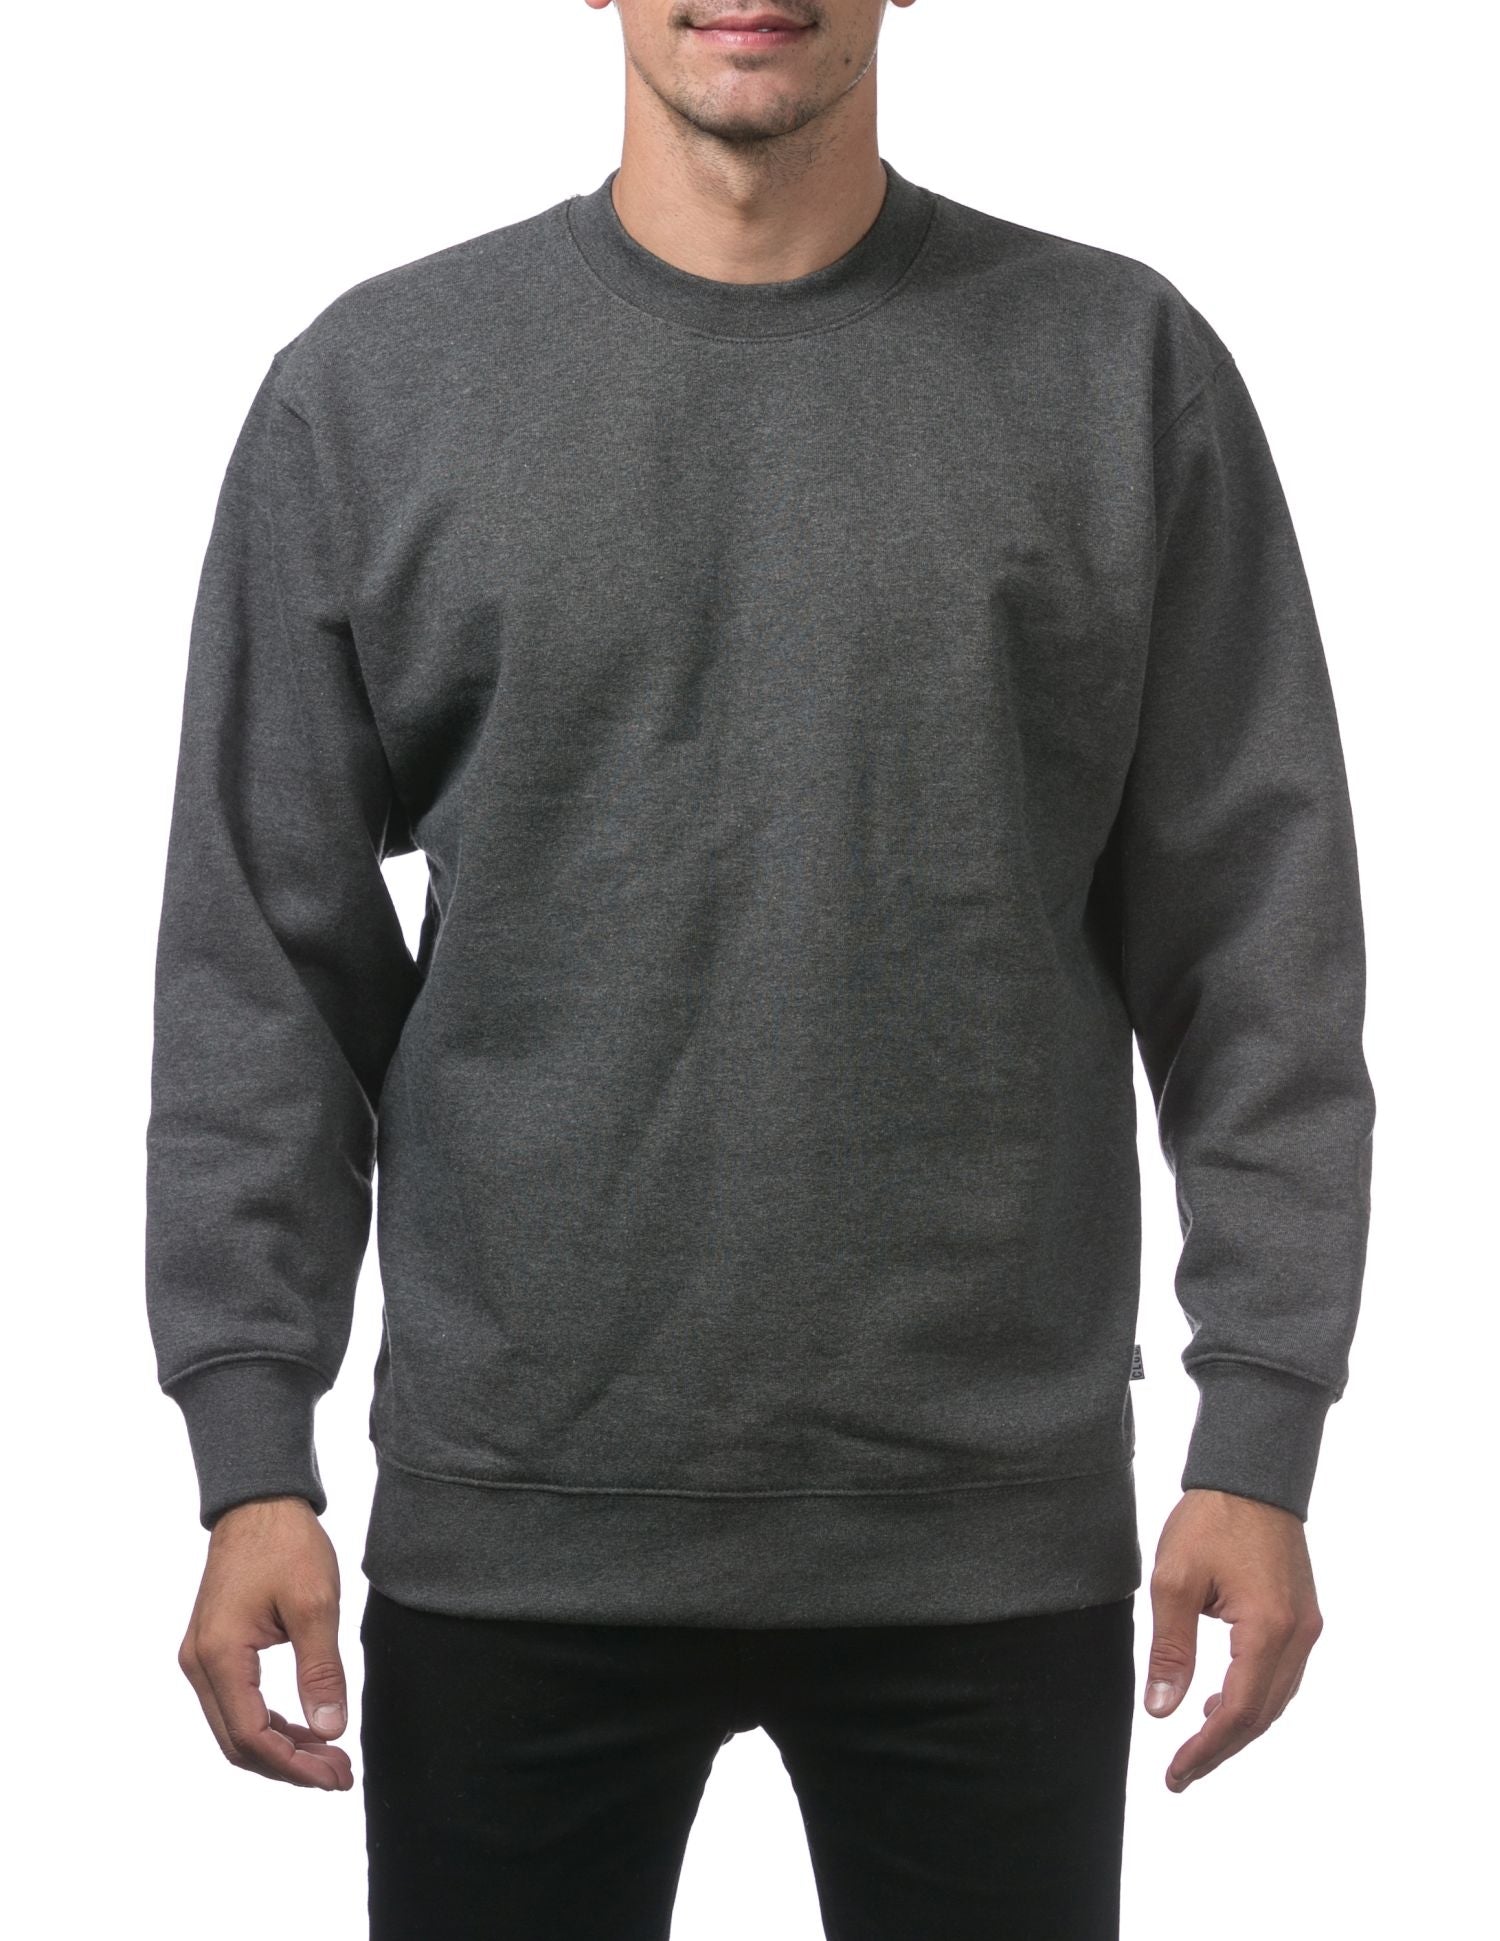 Pro Club Men's Comfort Crew Neck Fleece Pullover Sweater - Charcoal - Medium - Pro-Distributing